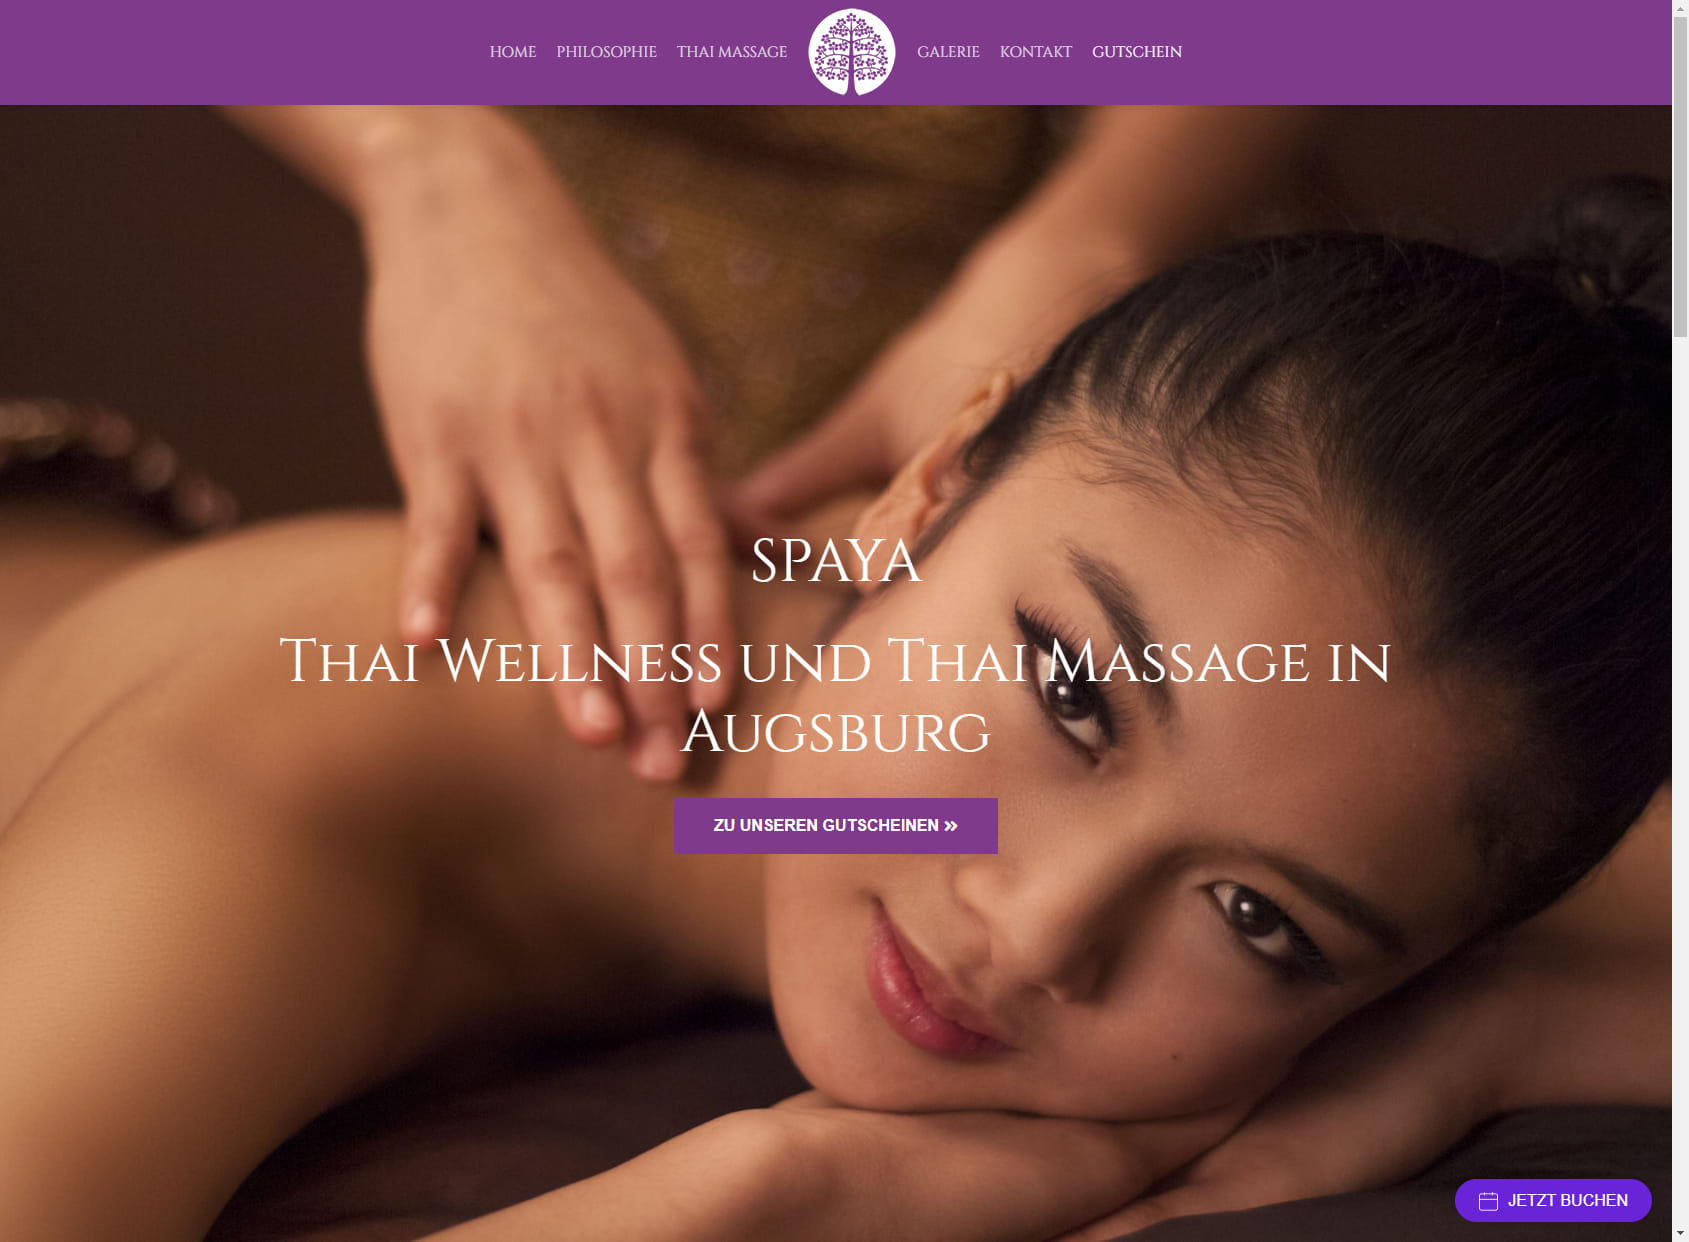 SPAYA - Thai spa and Thai massage